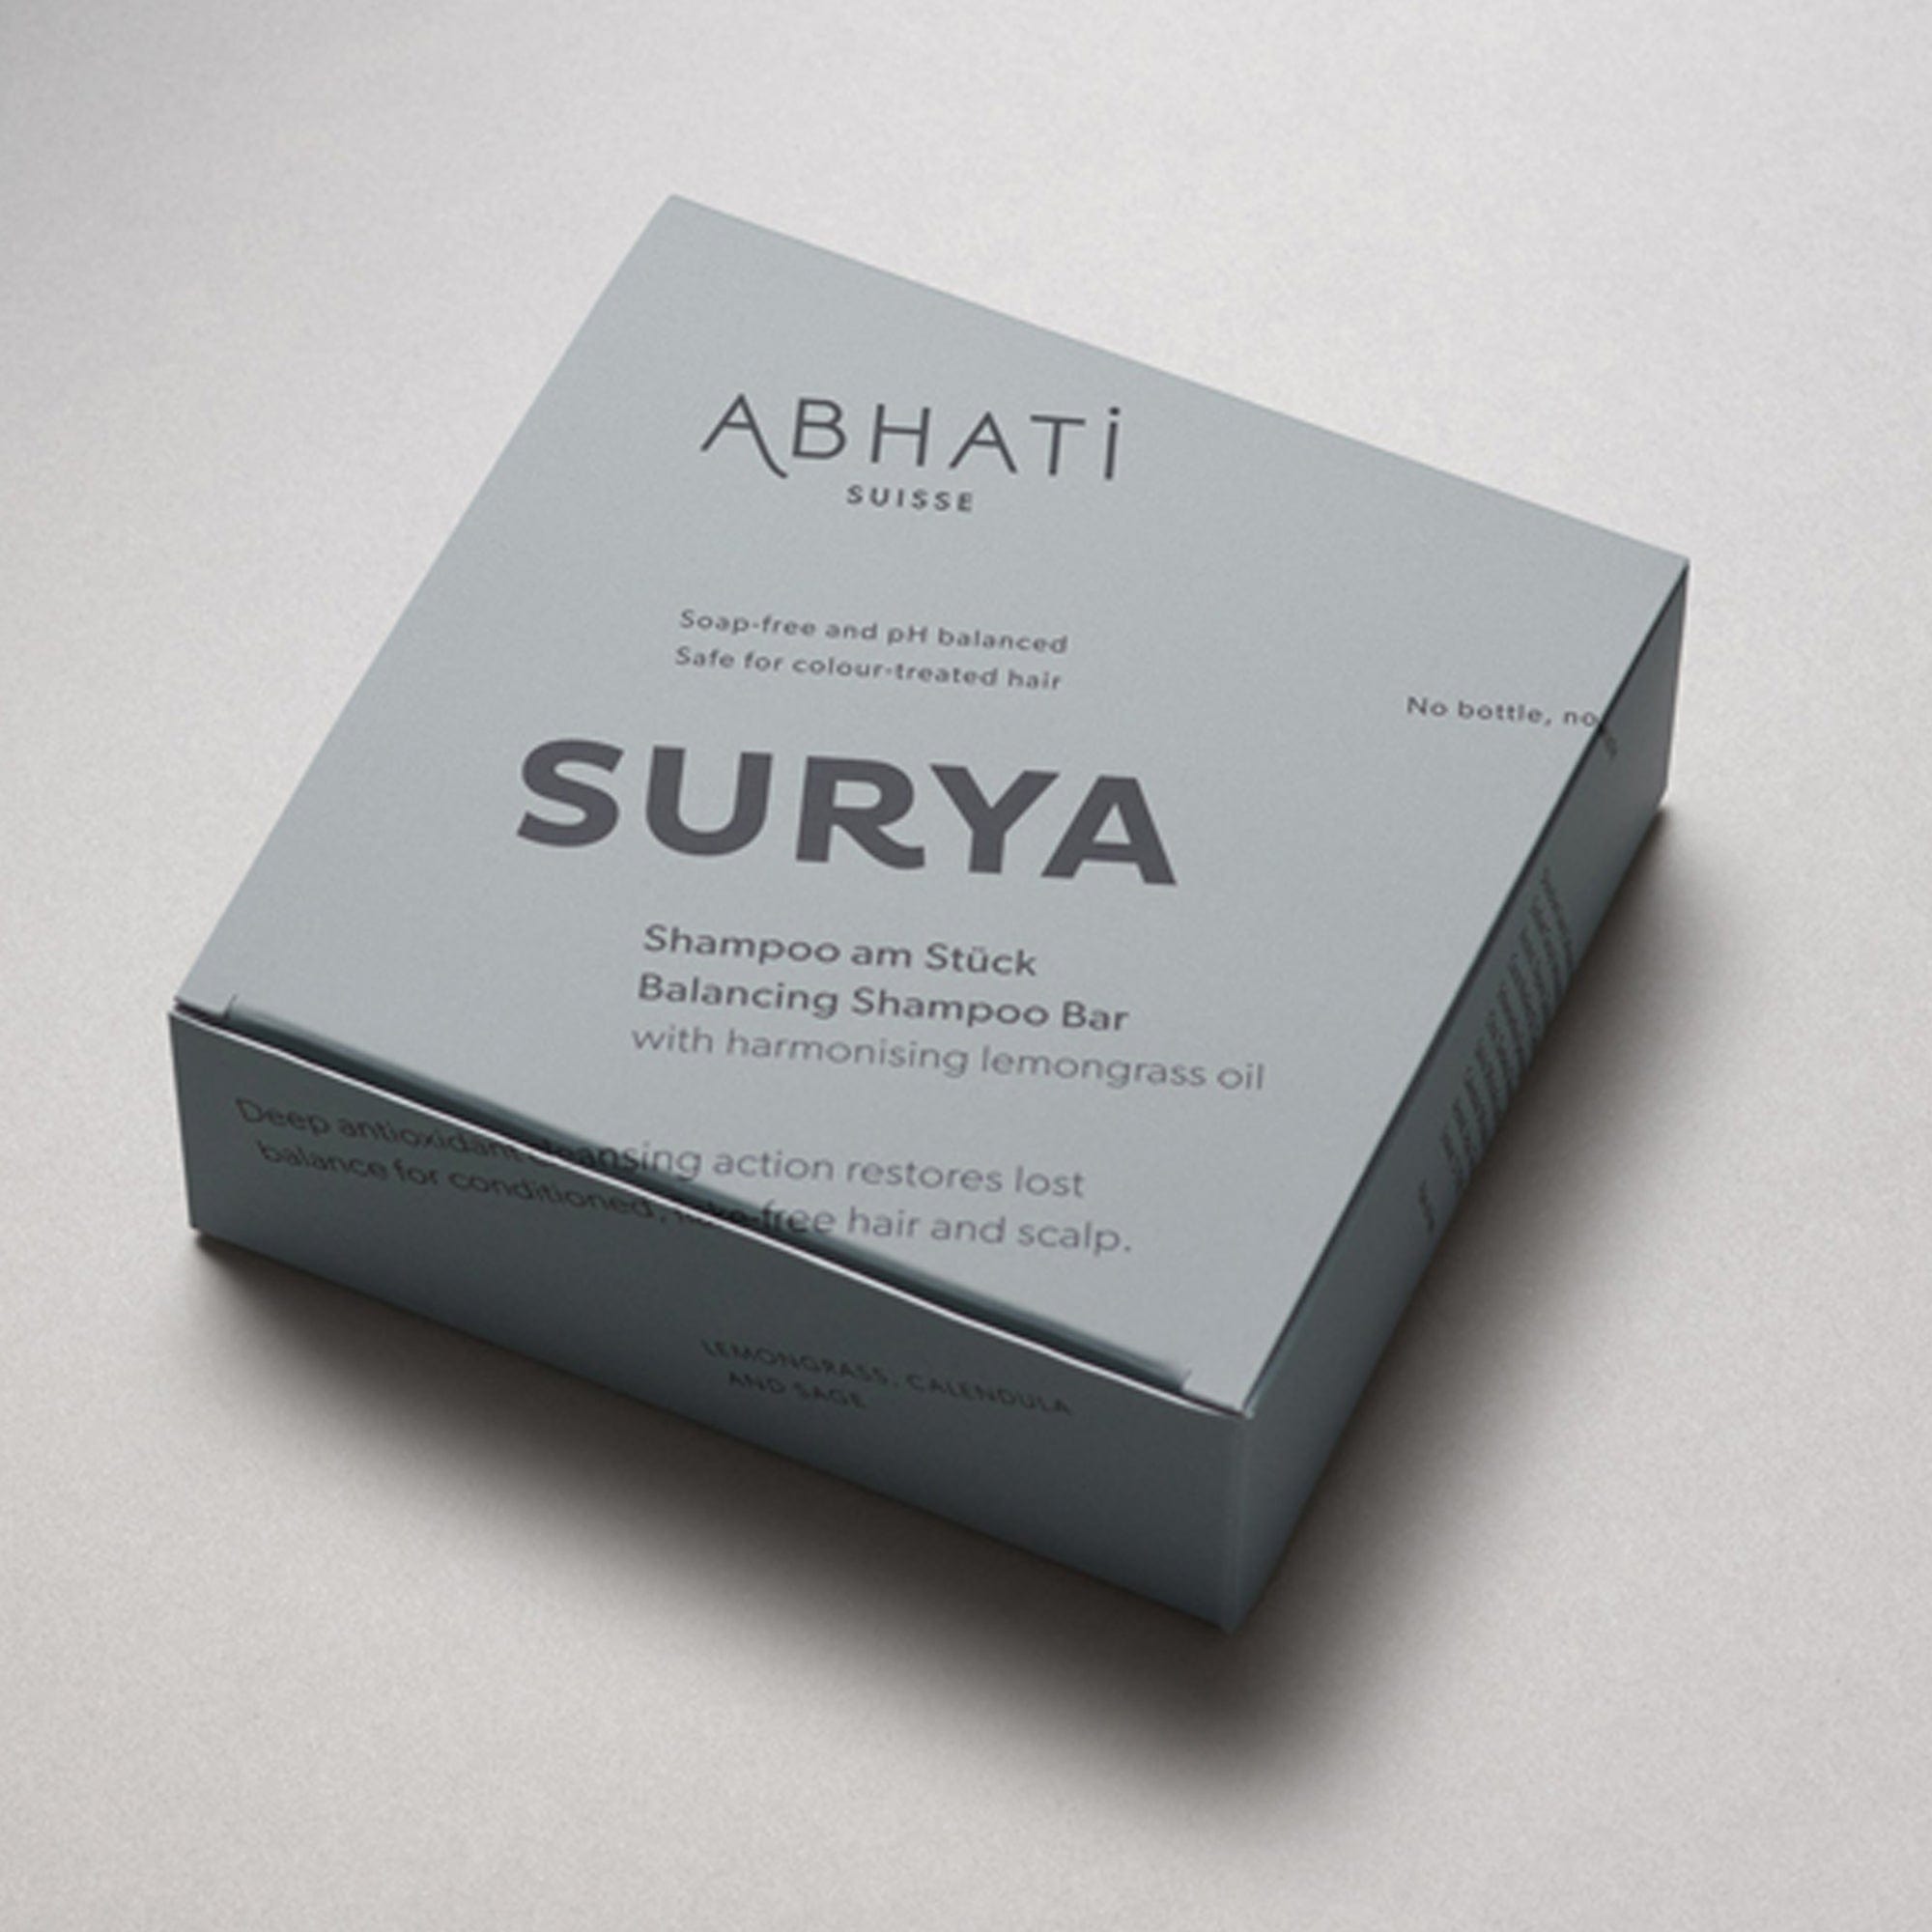 Surya Balancing Shampoo de ABHATI Champú sólido equilibrante